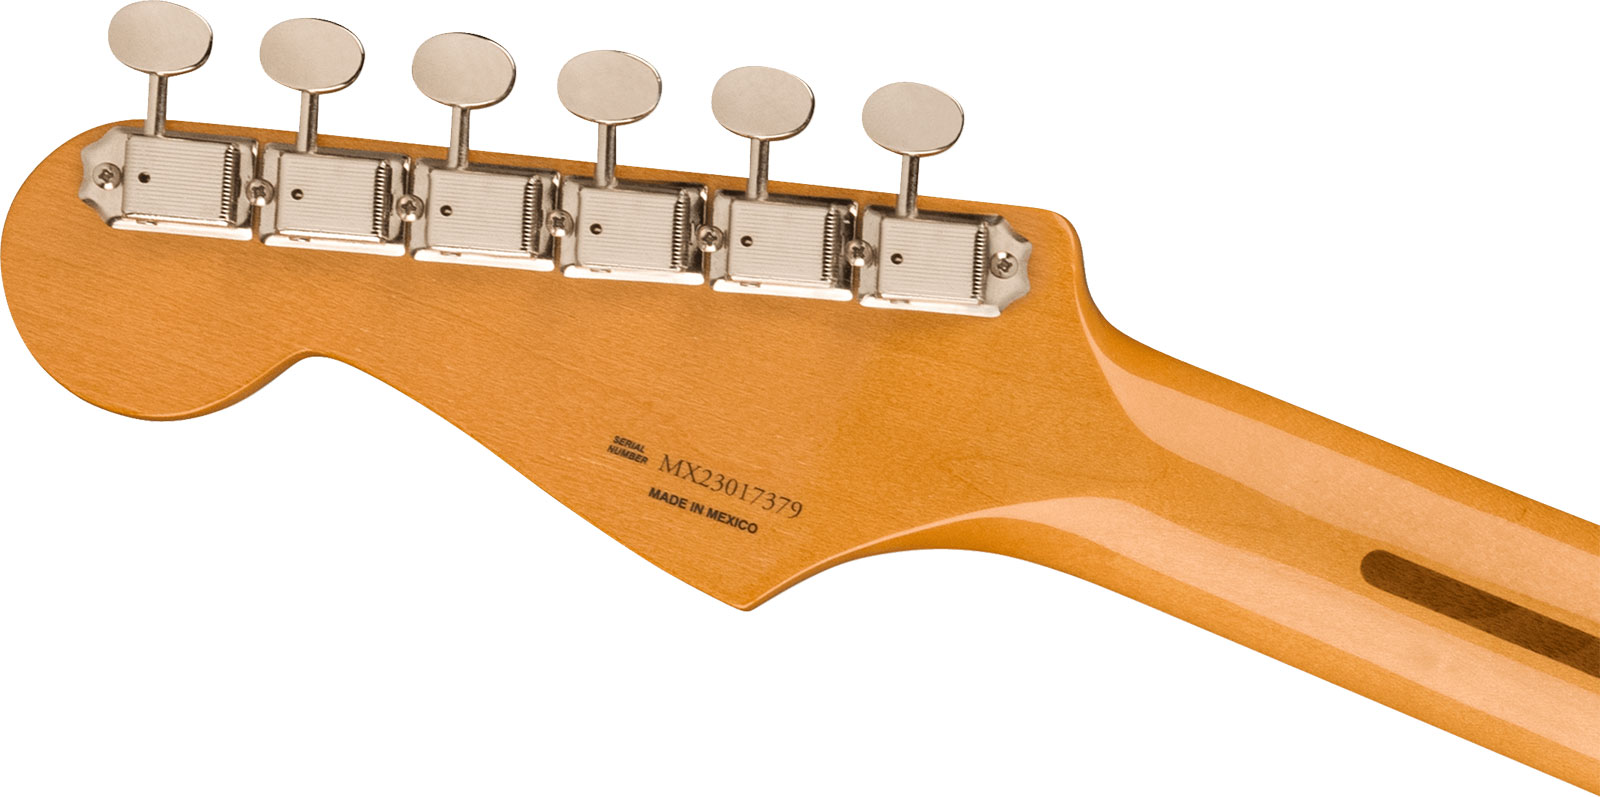 Fender Strat 50s Vintera 2 Mex 3s Trem Mn - Ocean Turquoise - Guitare Électrique Forme Str - Variation 3